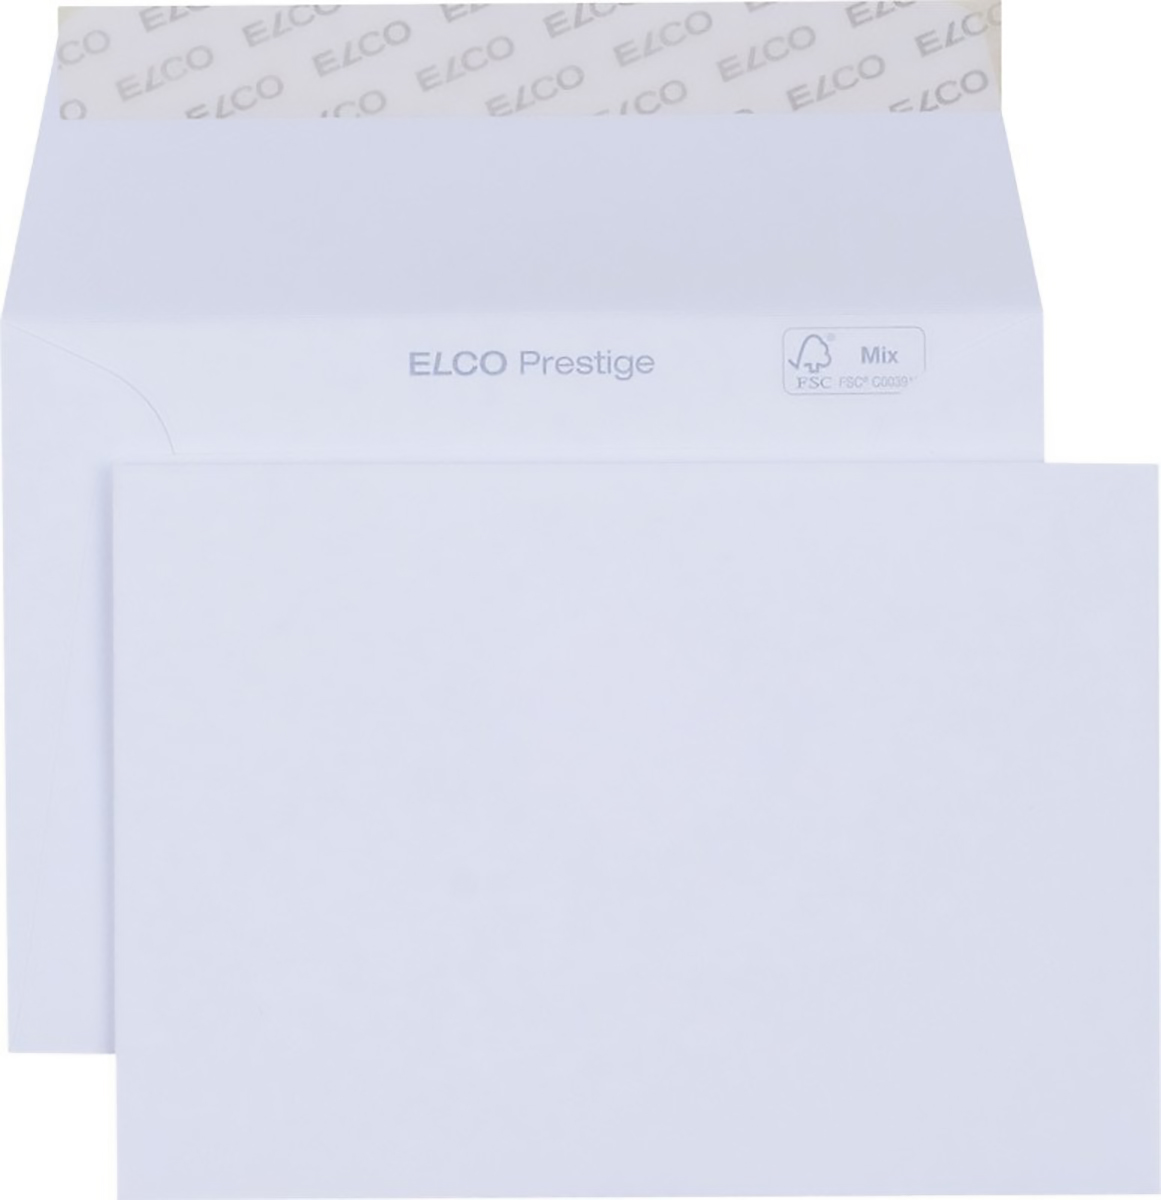 Elco Couvert Prestige C6 120gr ohne Fenster à 250 Pic1